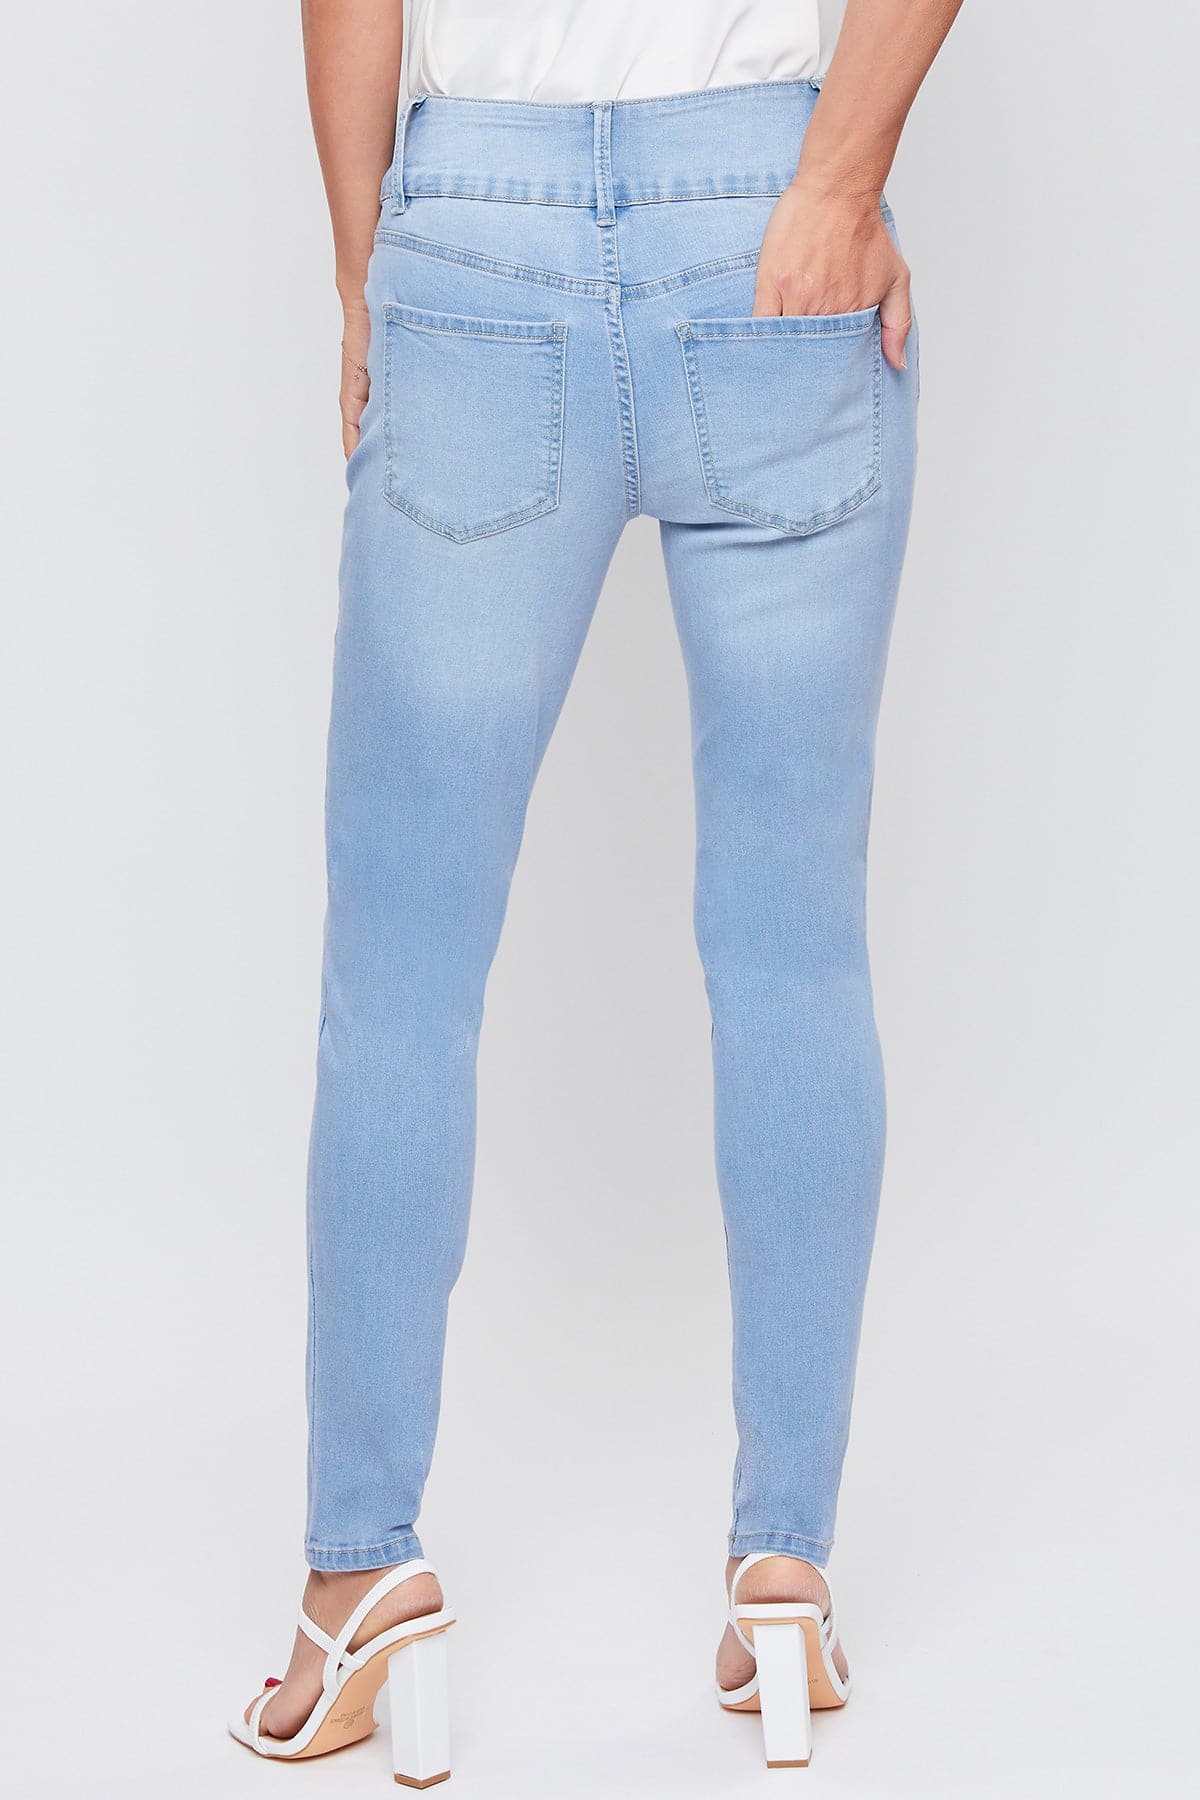 Women's 3 Button Signature Slim Stretch High Rise Skinny Jeans